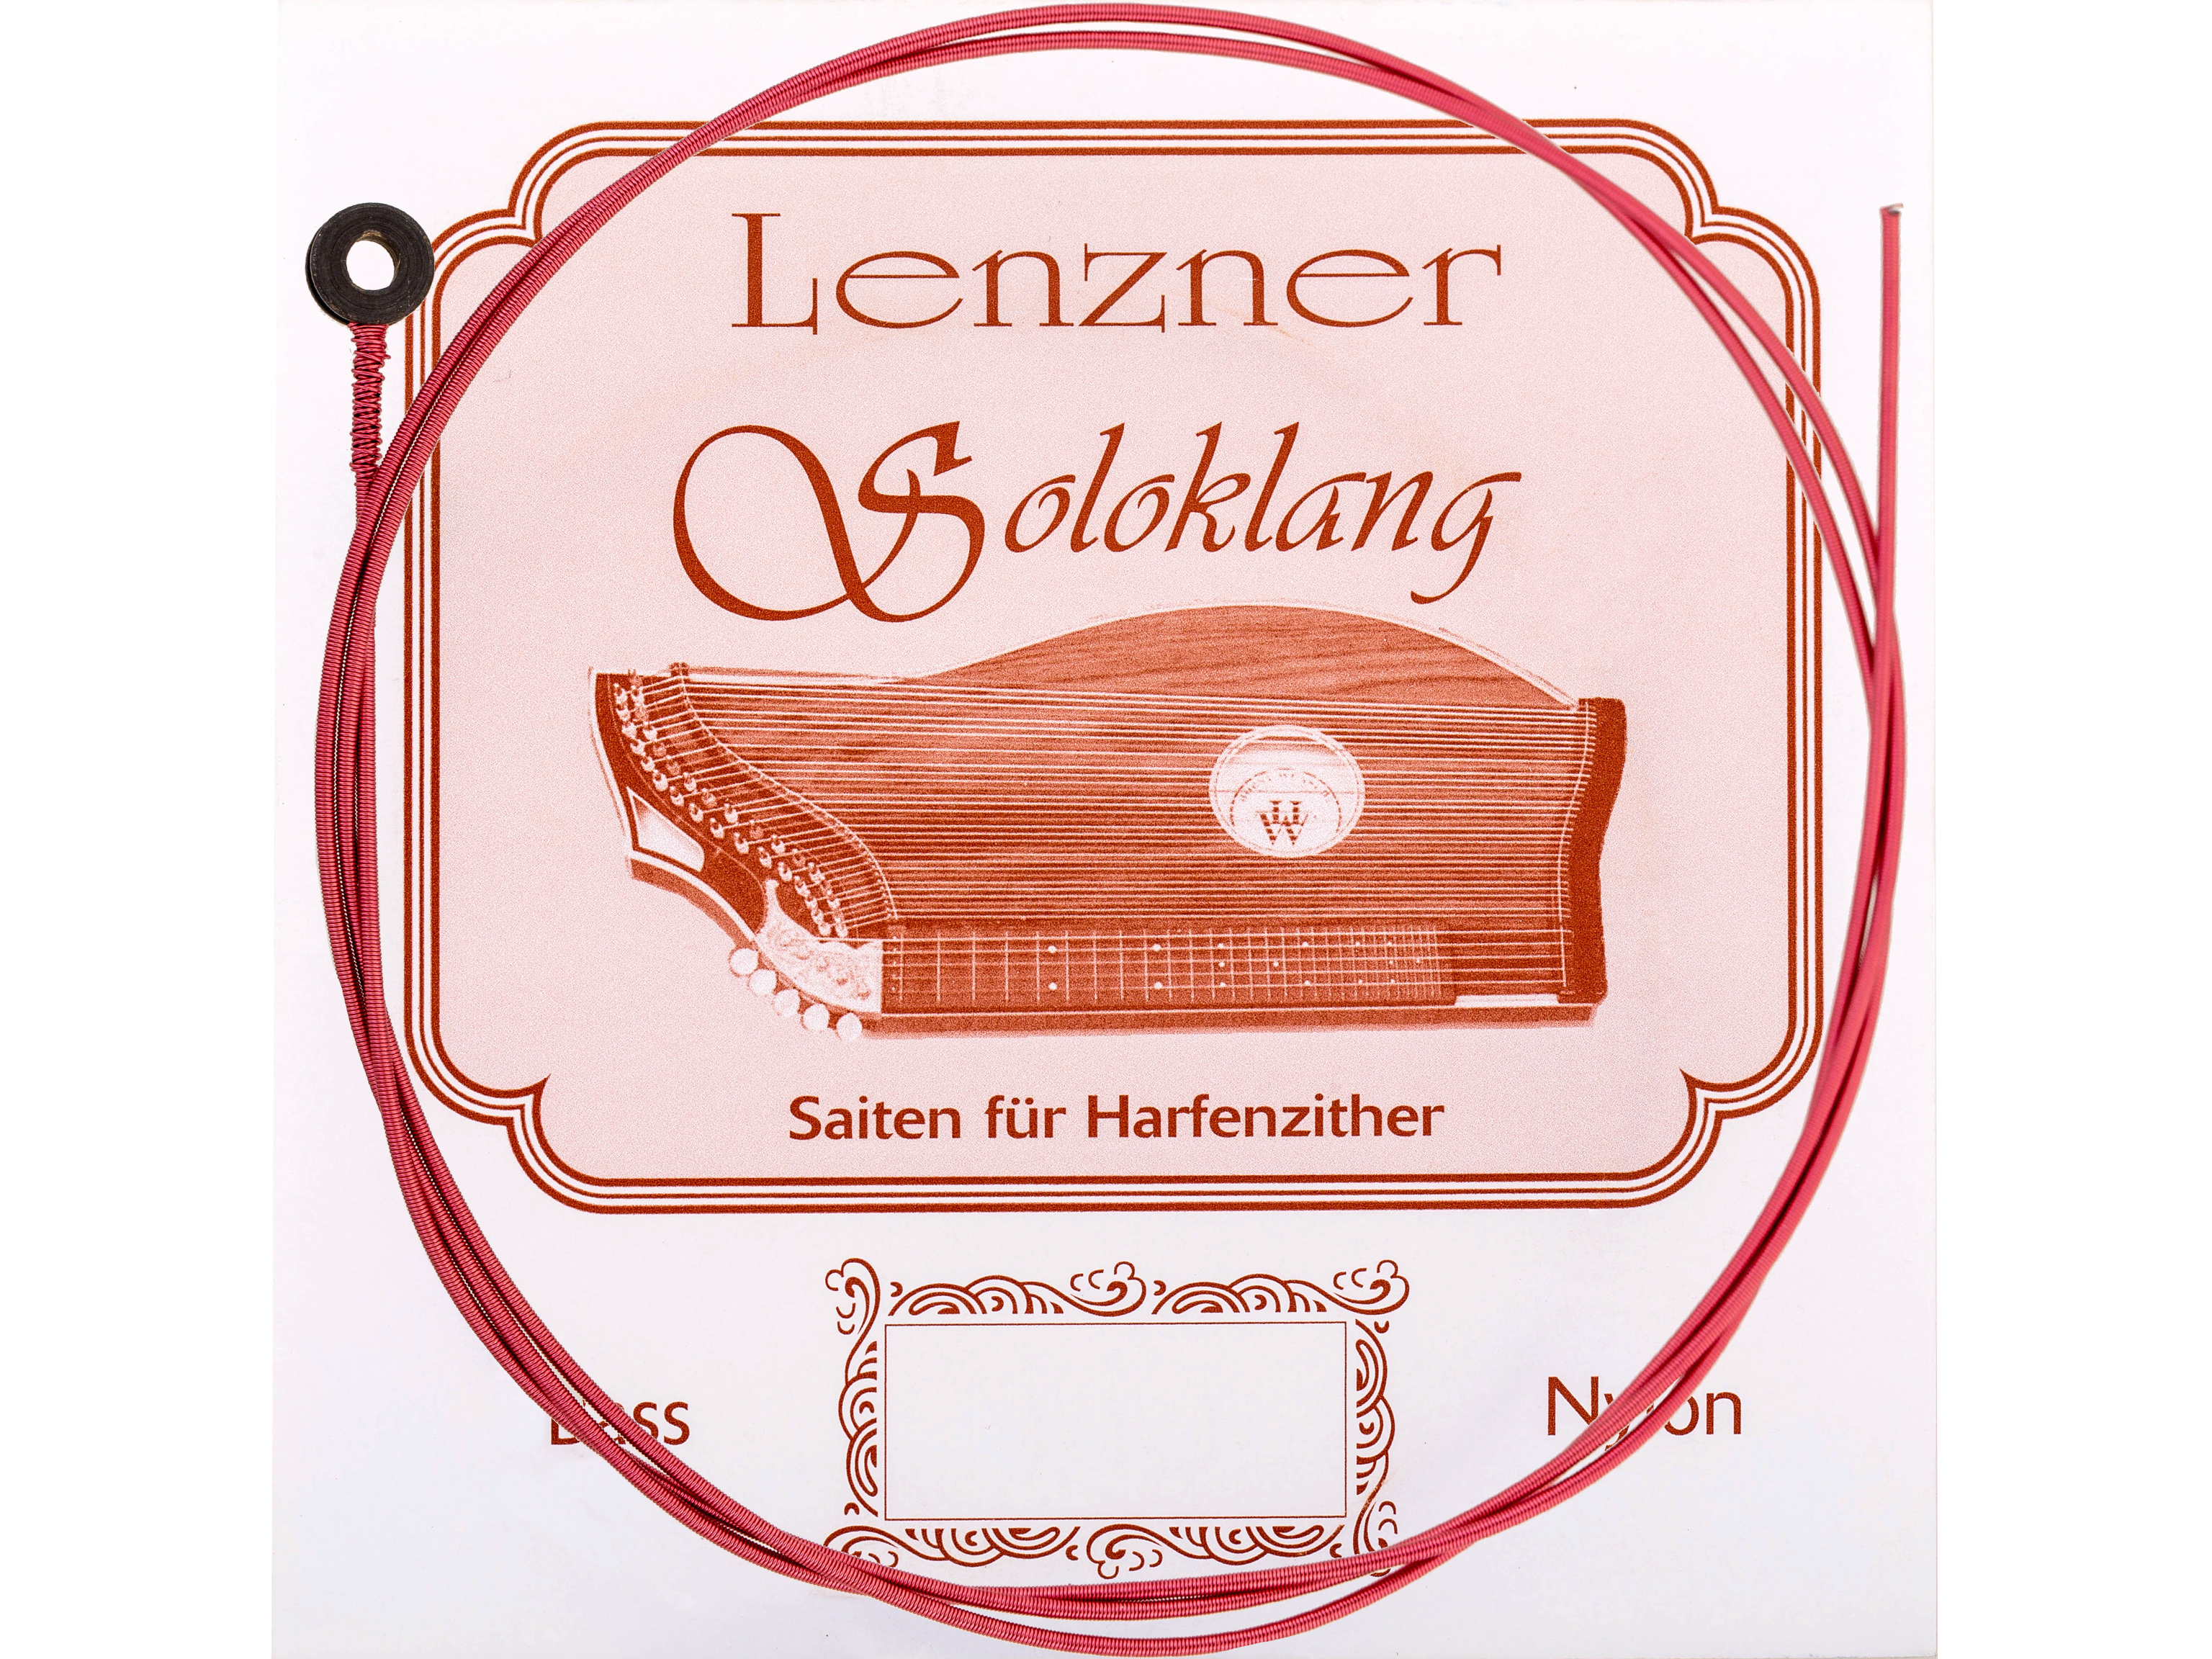 Lenzner Gis 24.Zithersaite Soloklang Bass